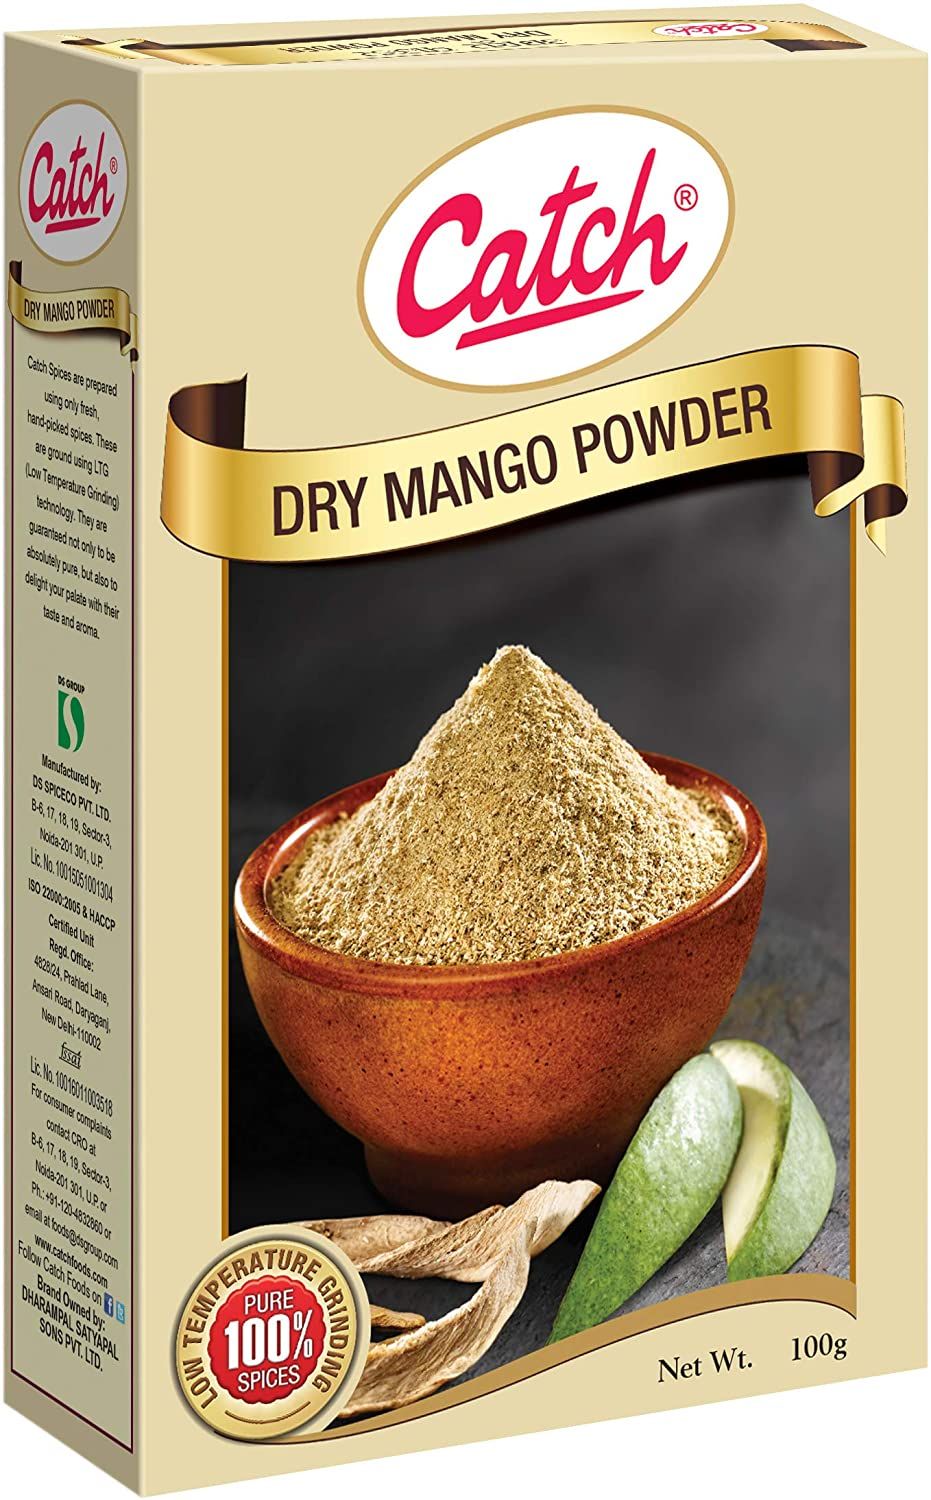 Catch Dry Mango Powder Image